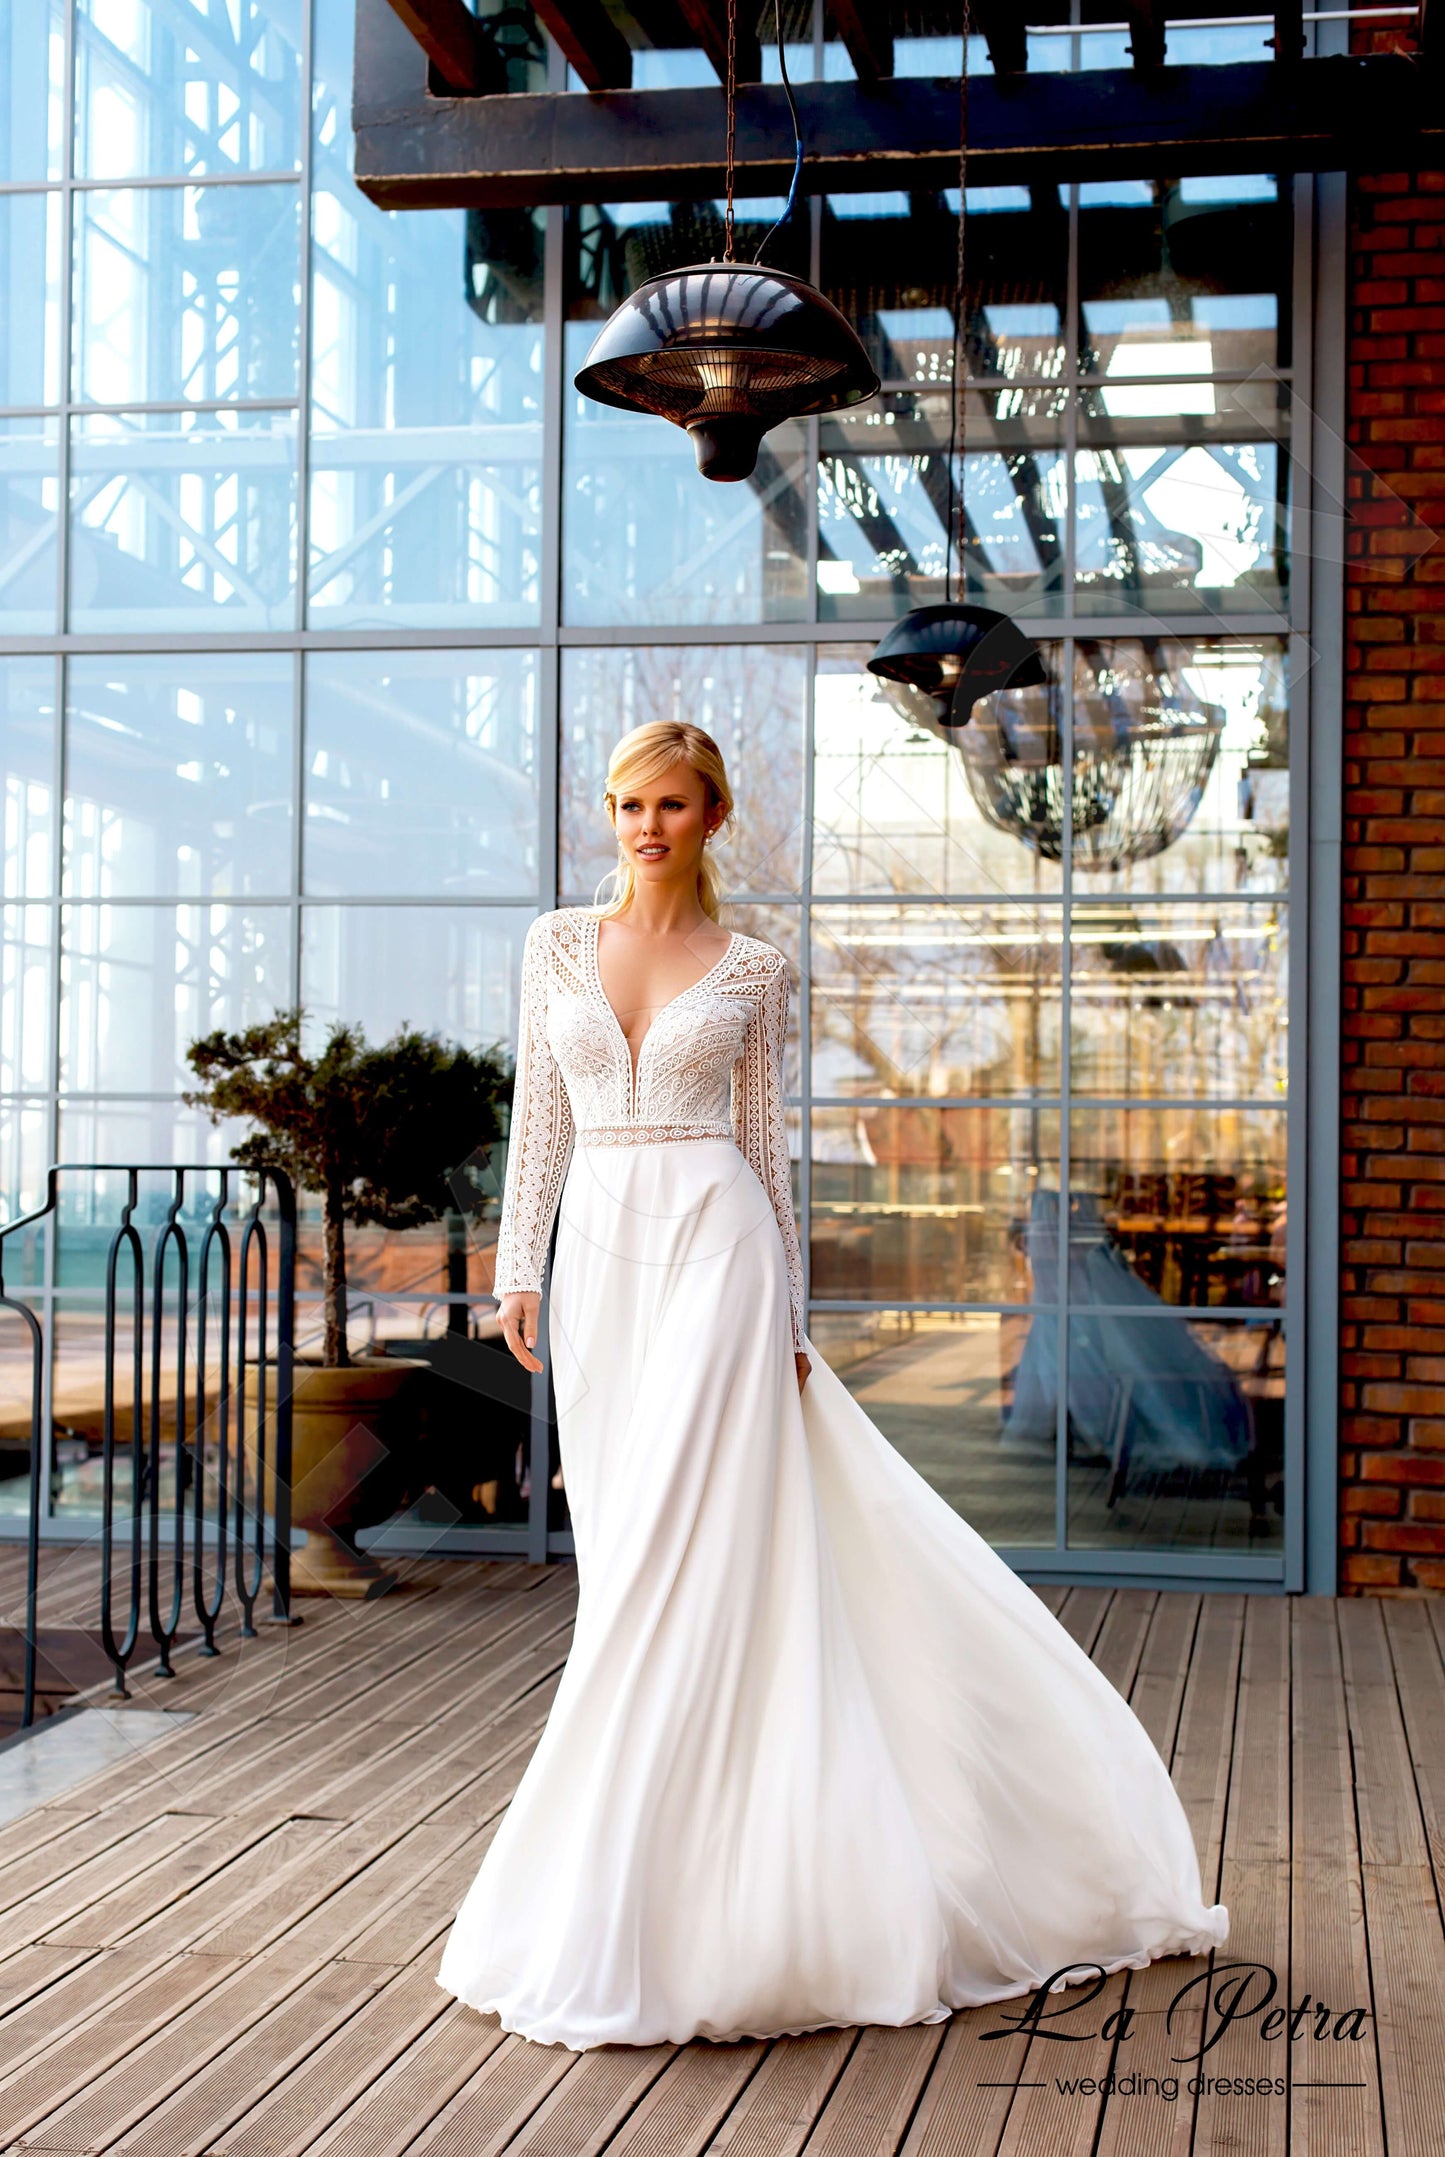 Odele Full back A-line Long sleeve Wedding Dress 5